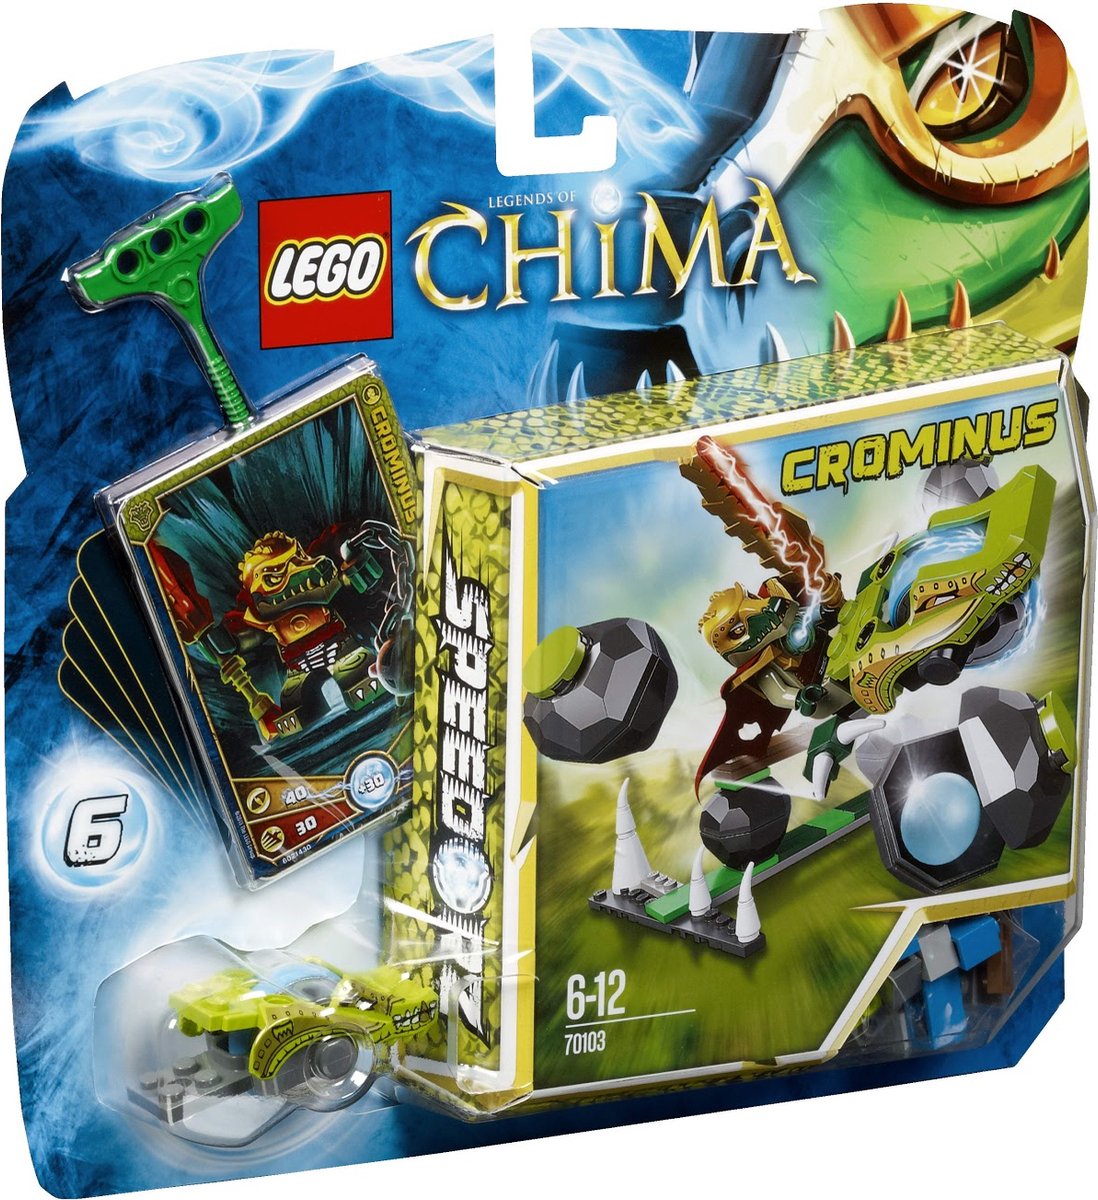 LEGO Chima Bowlen met rotsblokken - 70103 | bol.com